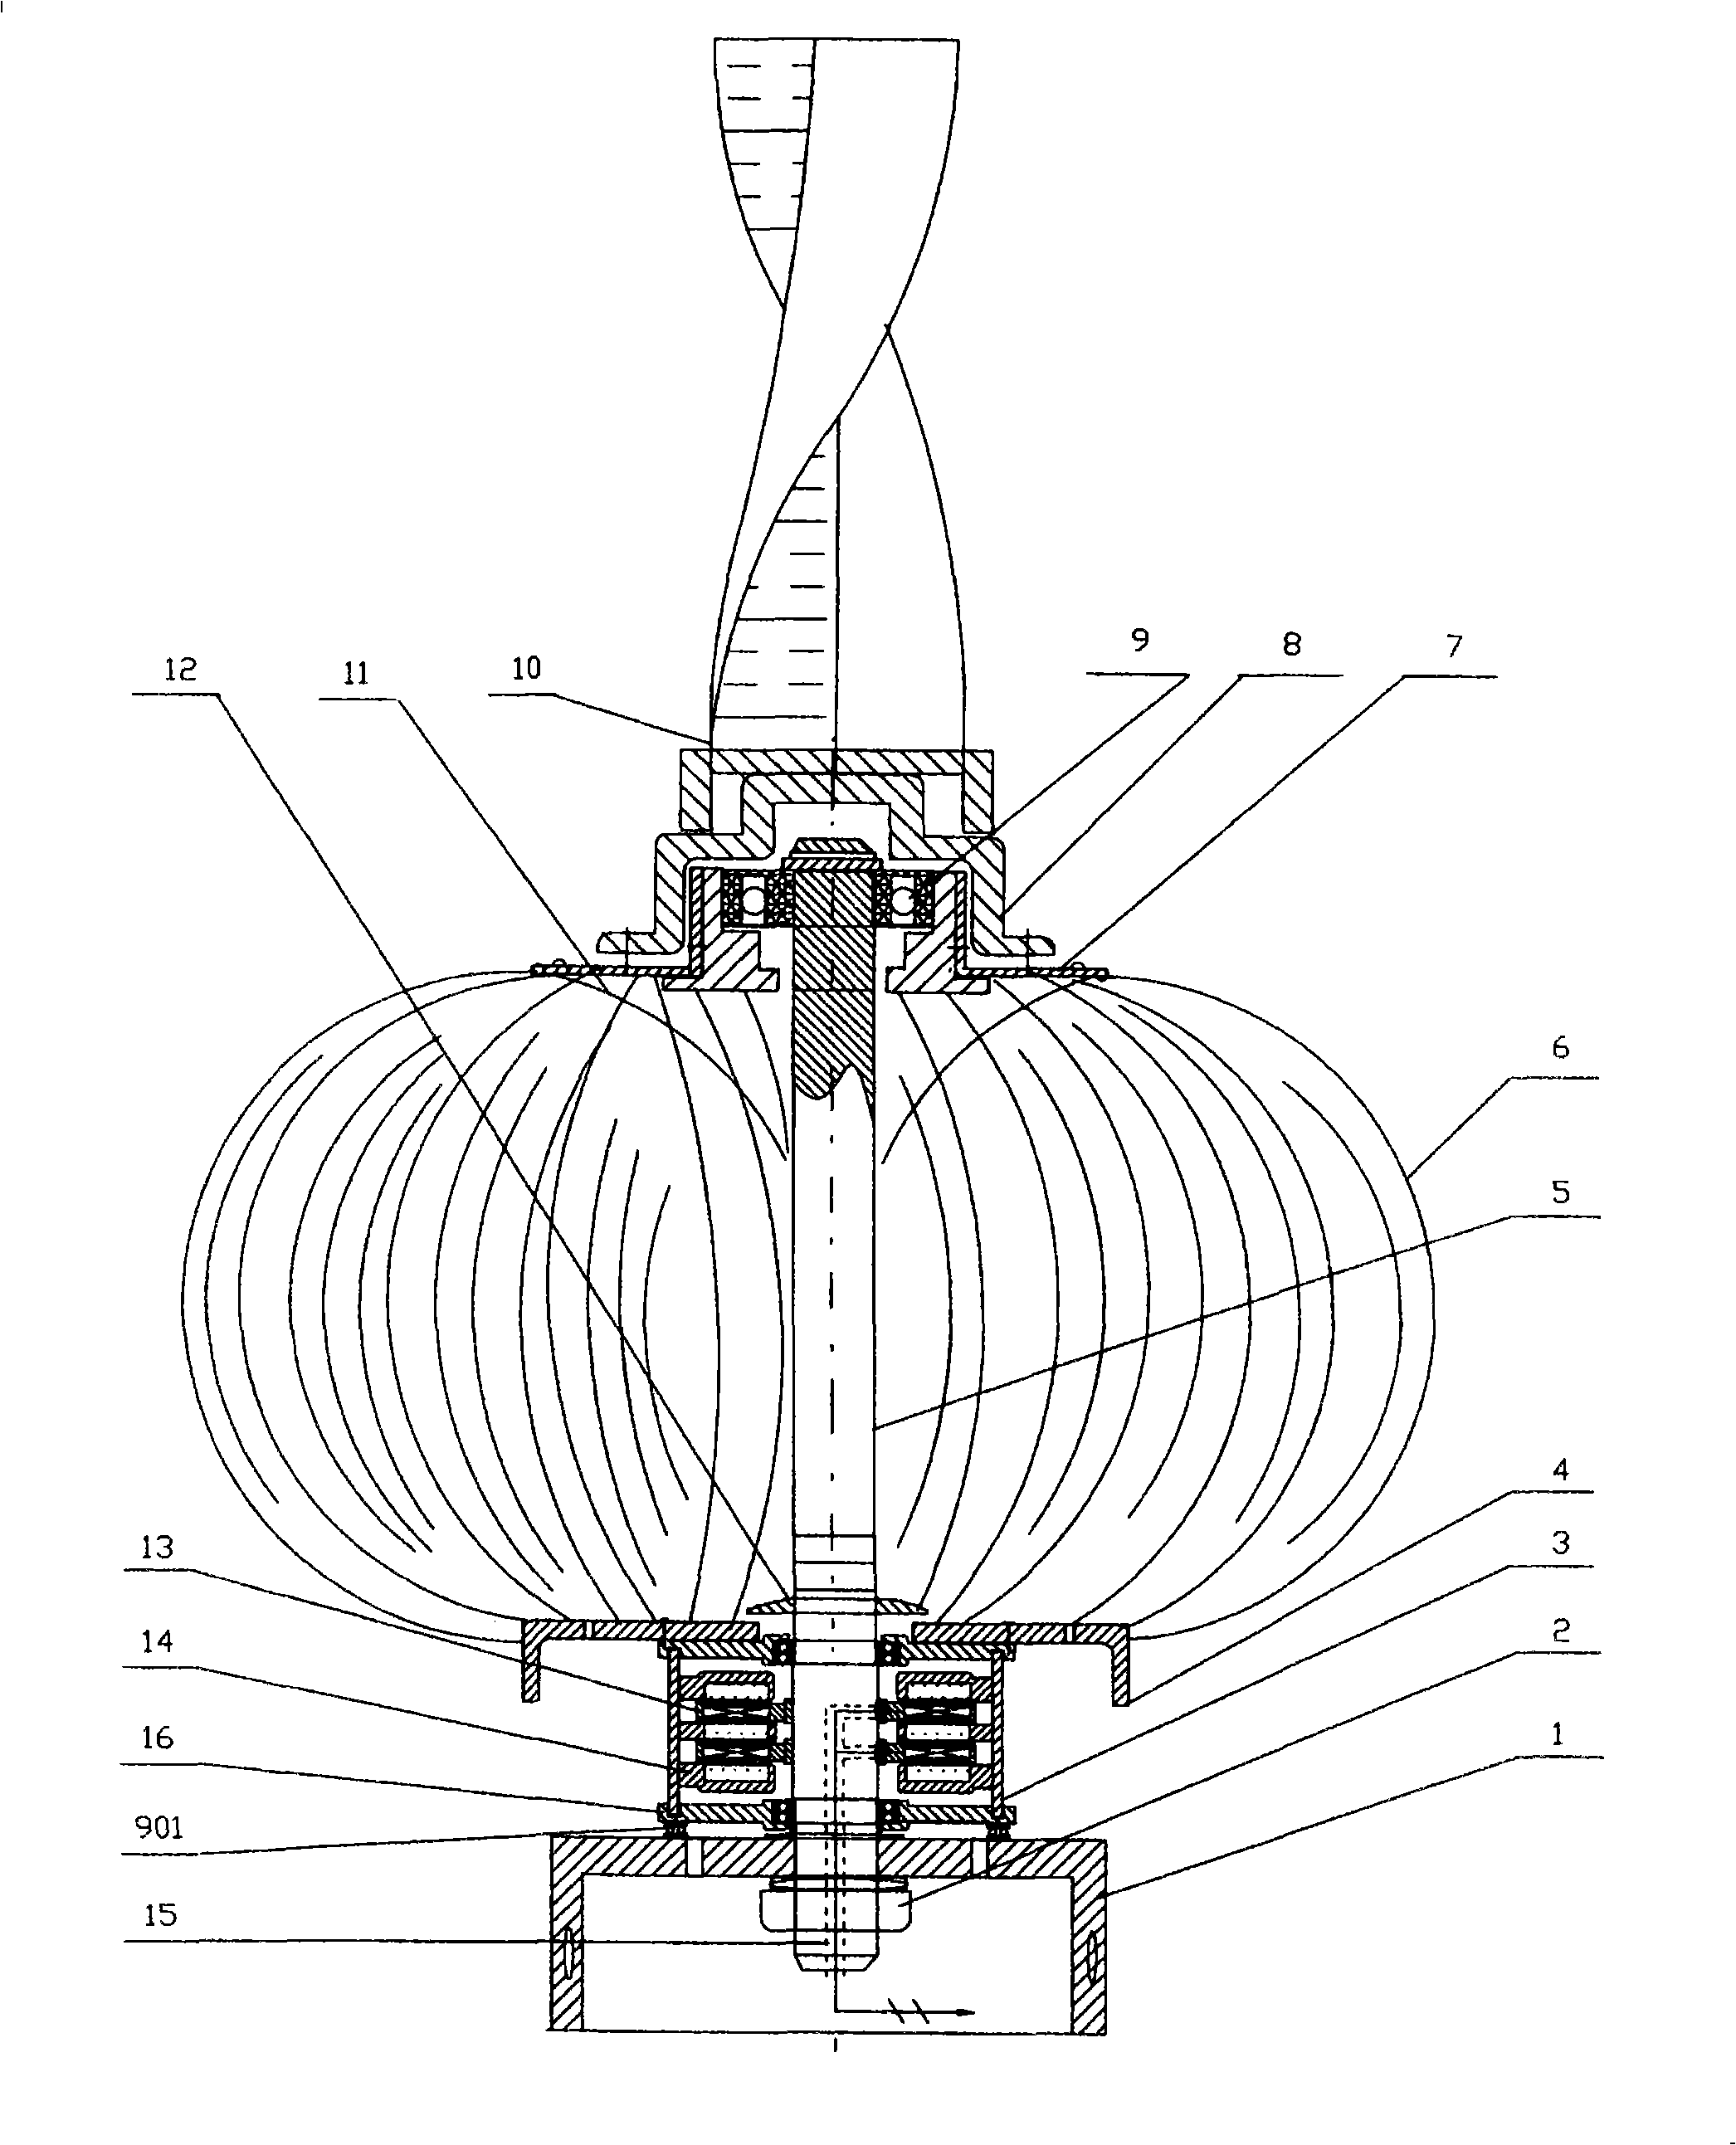 Aerogenerator with ventilation fan function